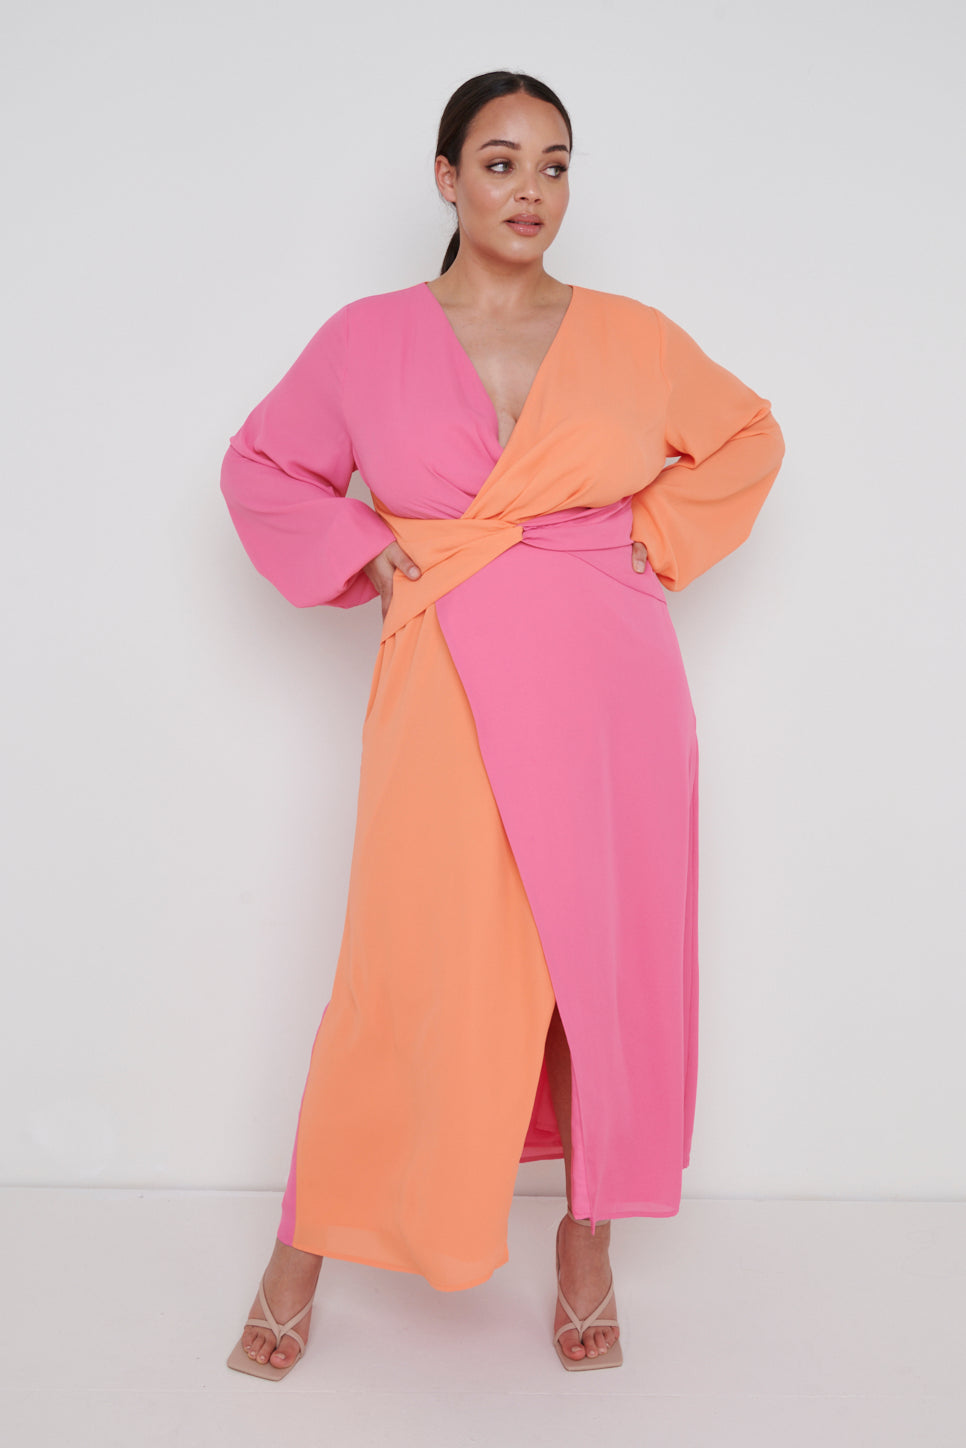 Frieda Knot Contrast Dress Curve - Orange and Pink, 22